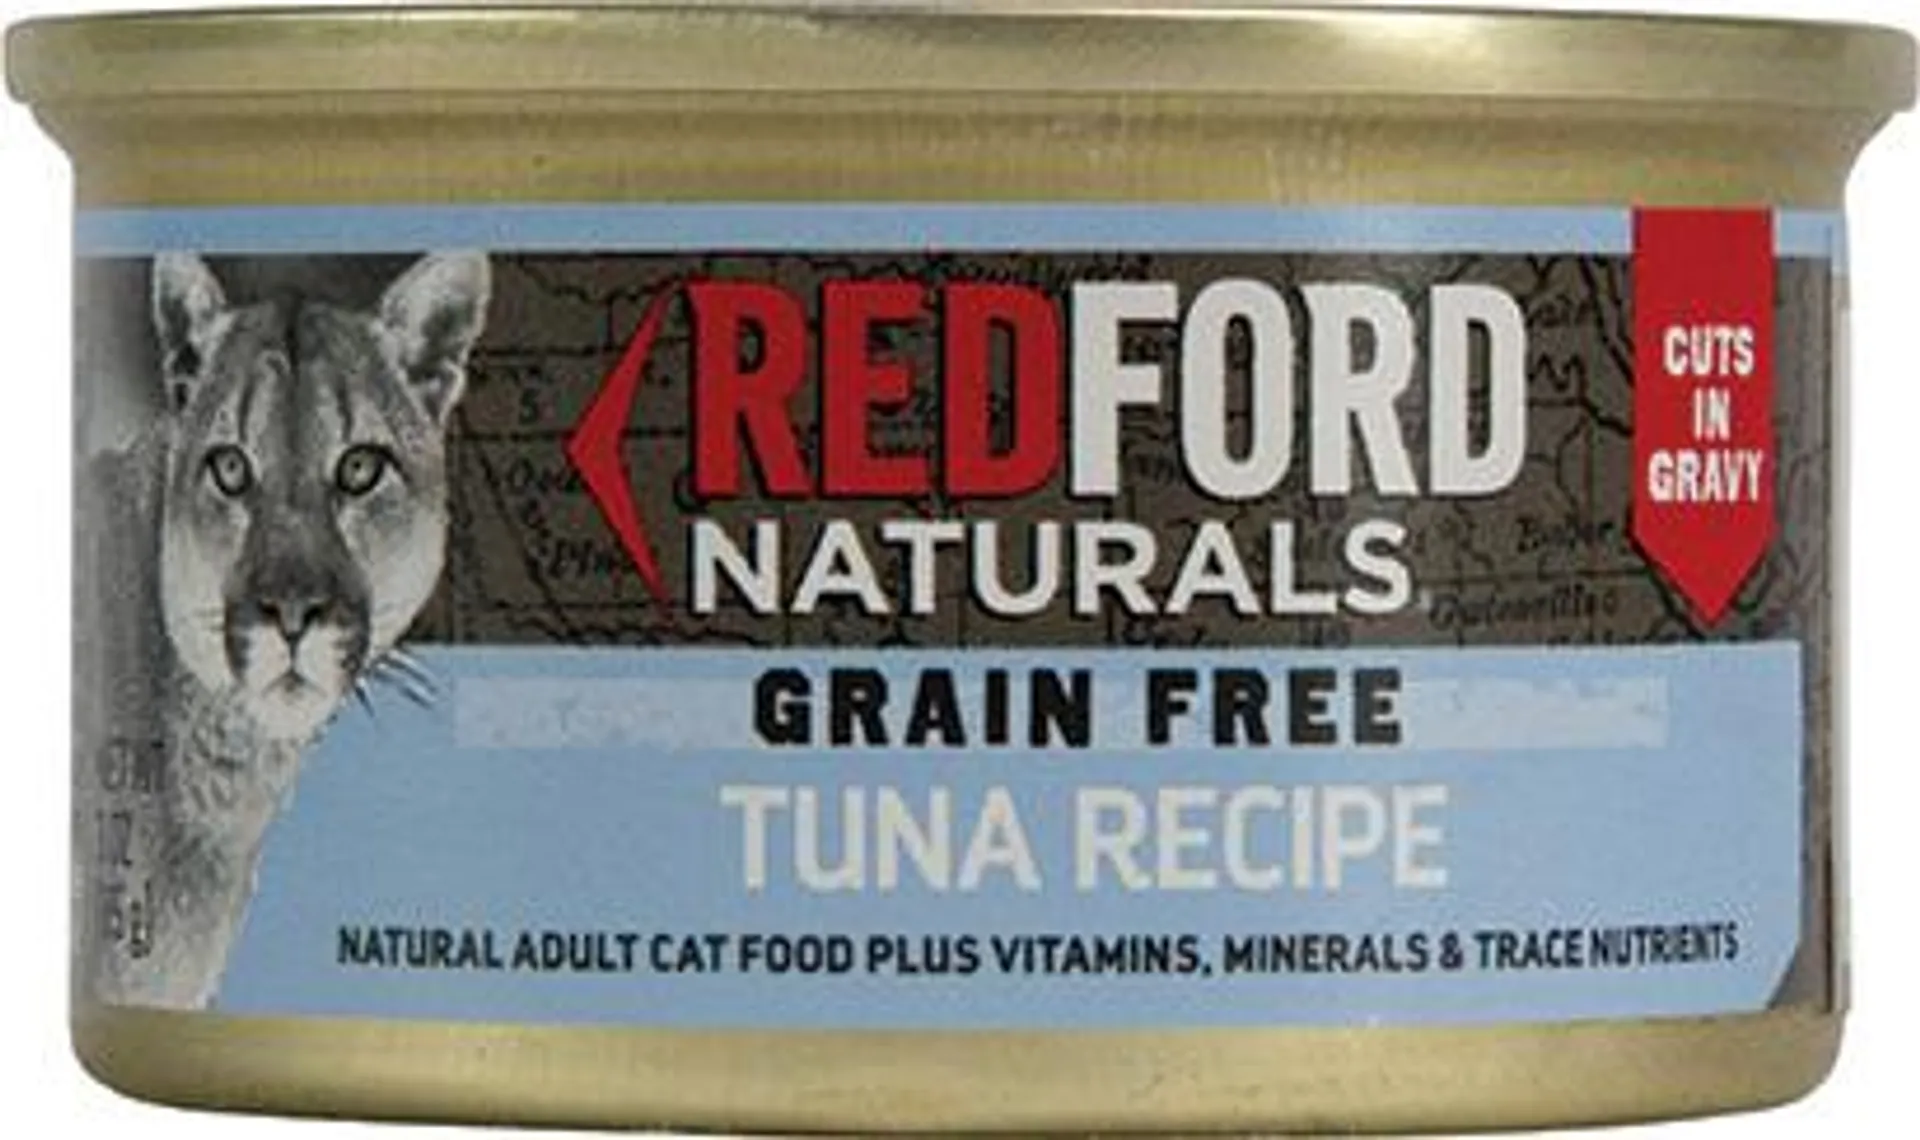 Redford Naturals Grain Free Cuts in Gravy Tuna Recipe Adult Cat Food, 3 Ounces